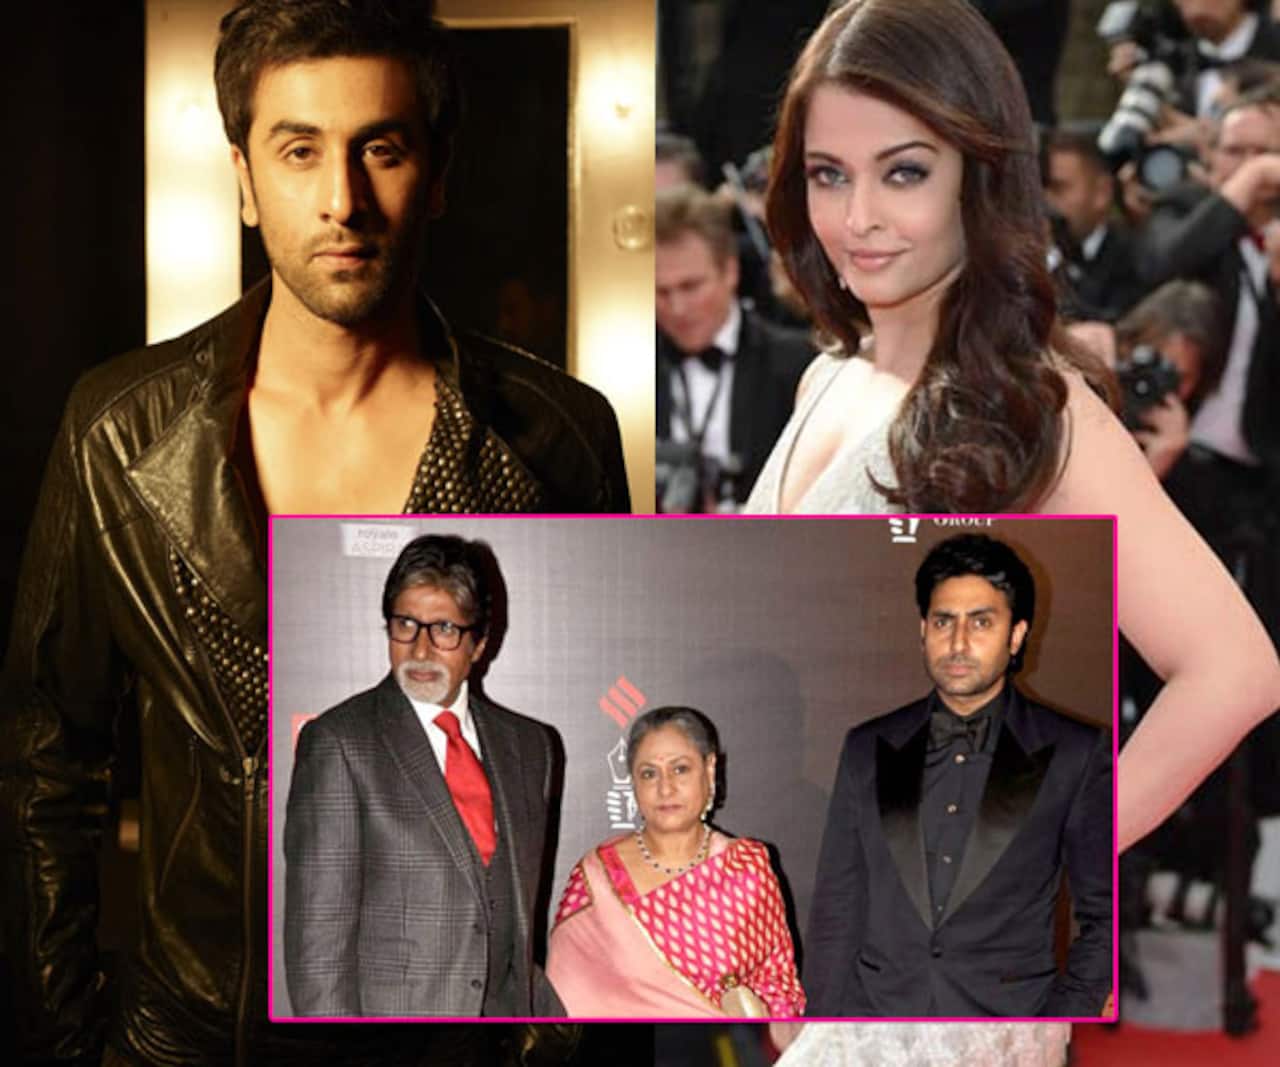 Aishwarya Rai Bachchan's intimate scenes with Ranbir Kapoor in Ae Dil Hai Mushkil angered the Bachchans?